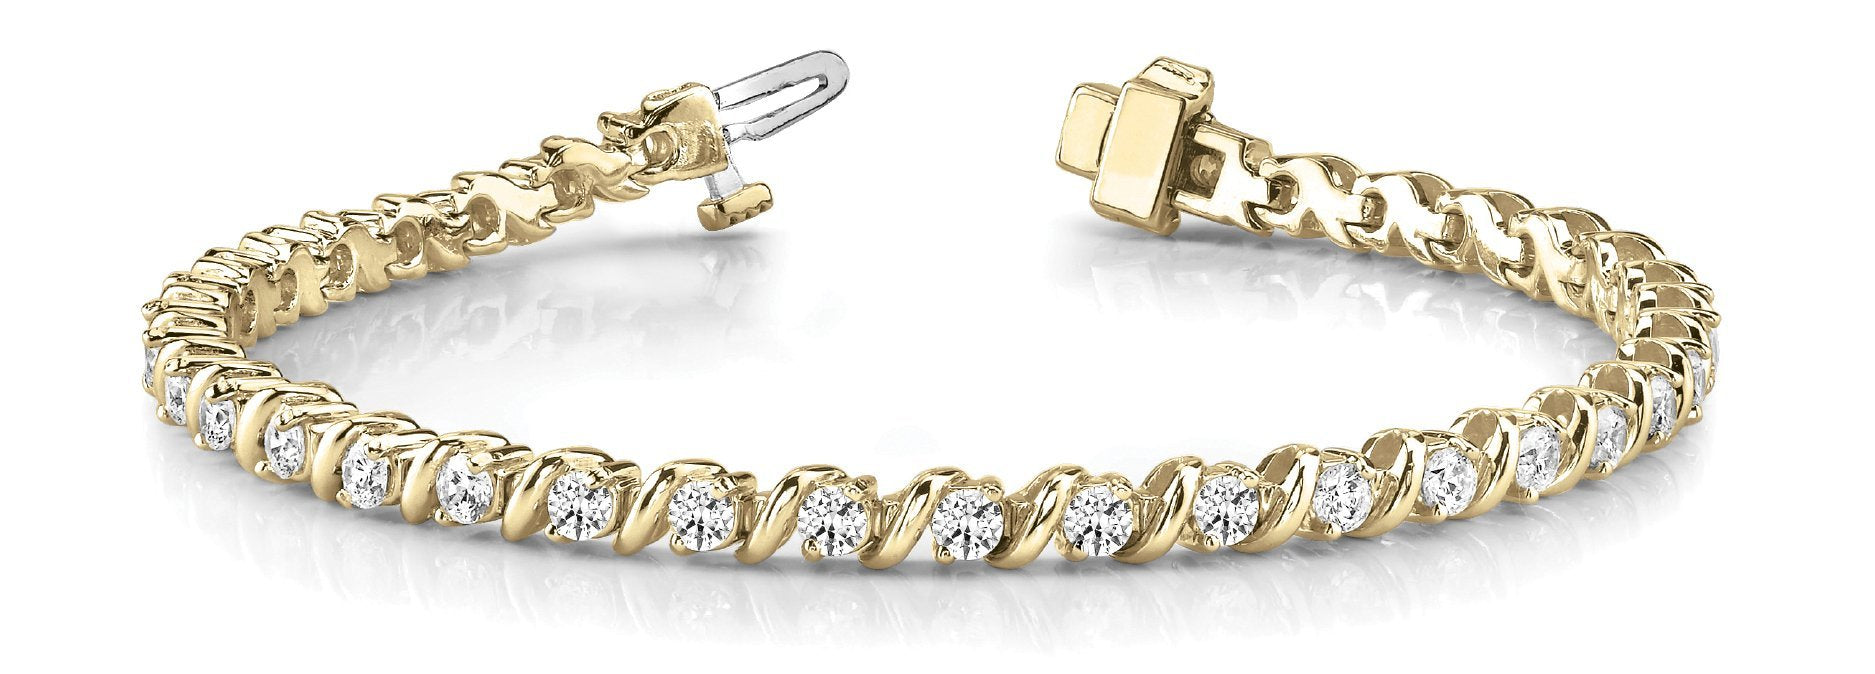 Fancy Diamond Bracelet Ladies 8.97ct tw - 14kt Gold